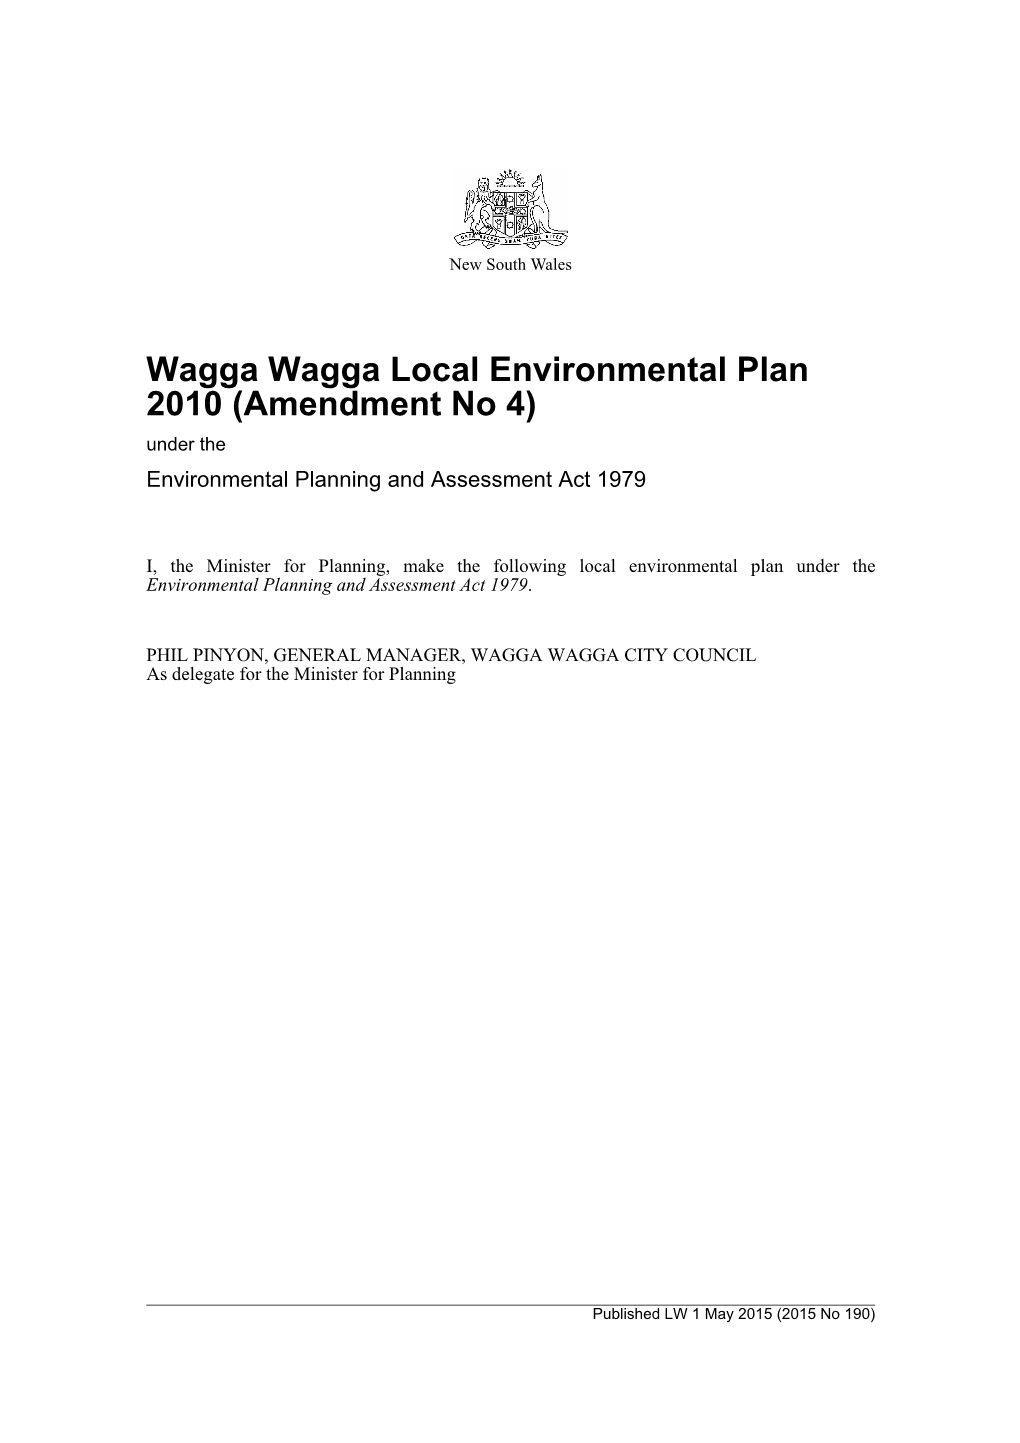 Wagga Wagga Local Environmental Plan 2010 (Amendment No 4) Under the Environmental Planning and Assessment Act 1979